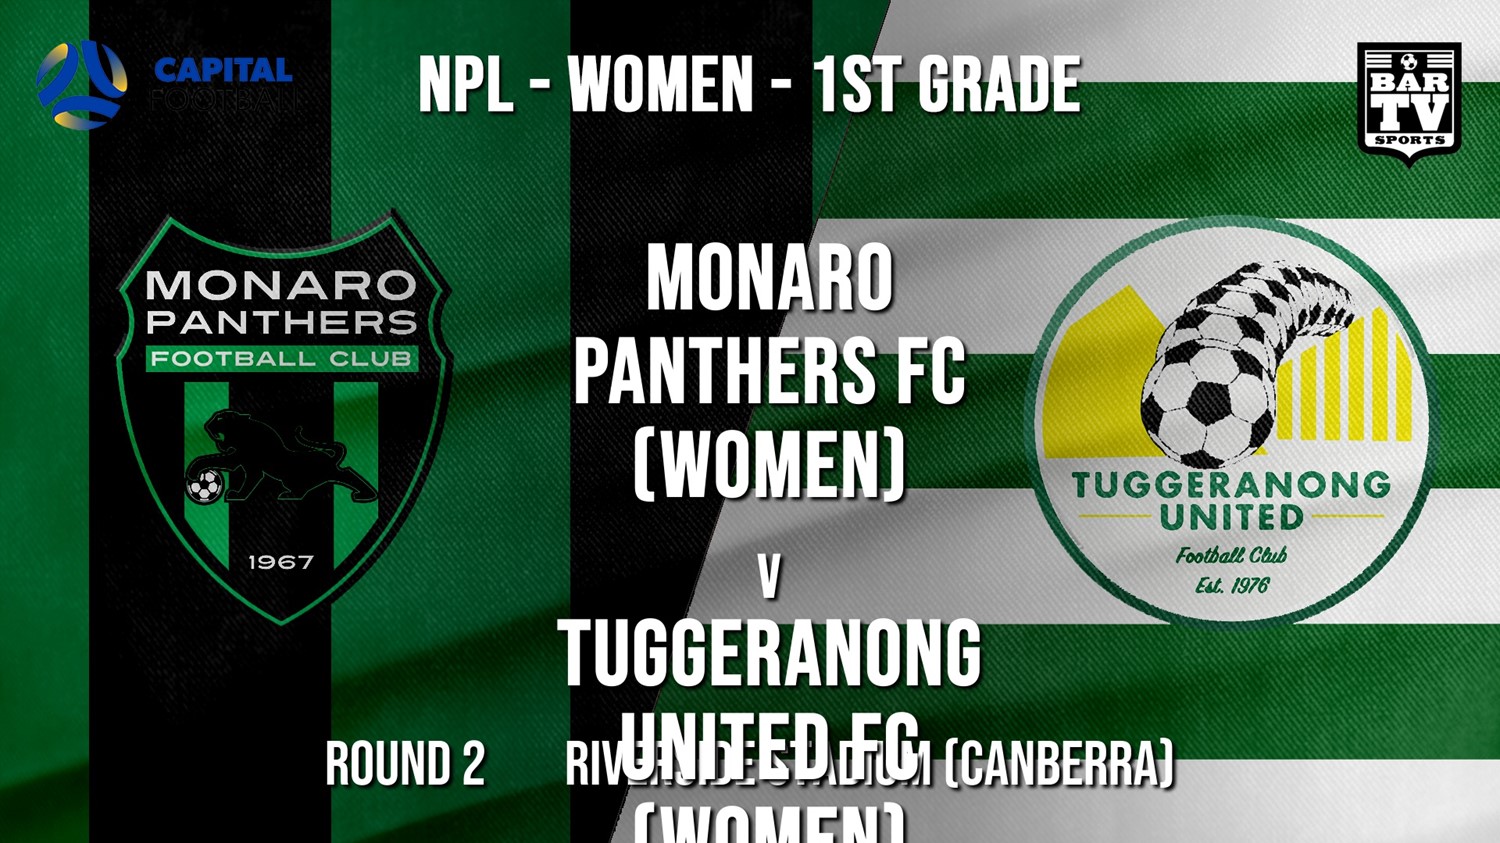 NPL Women - Capital Round 2 - Monaro Panthers FC (women) v Tuggeranong United FC (women) Minigame Slate Image